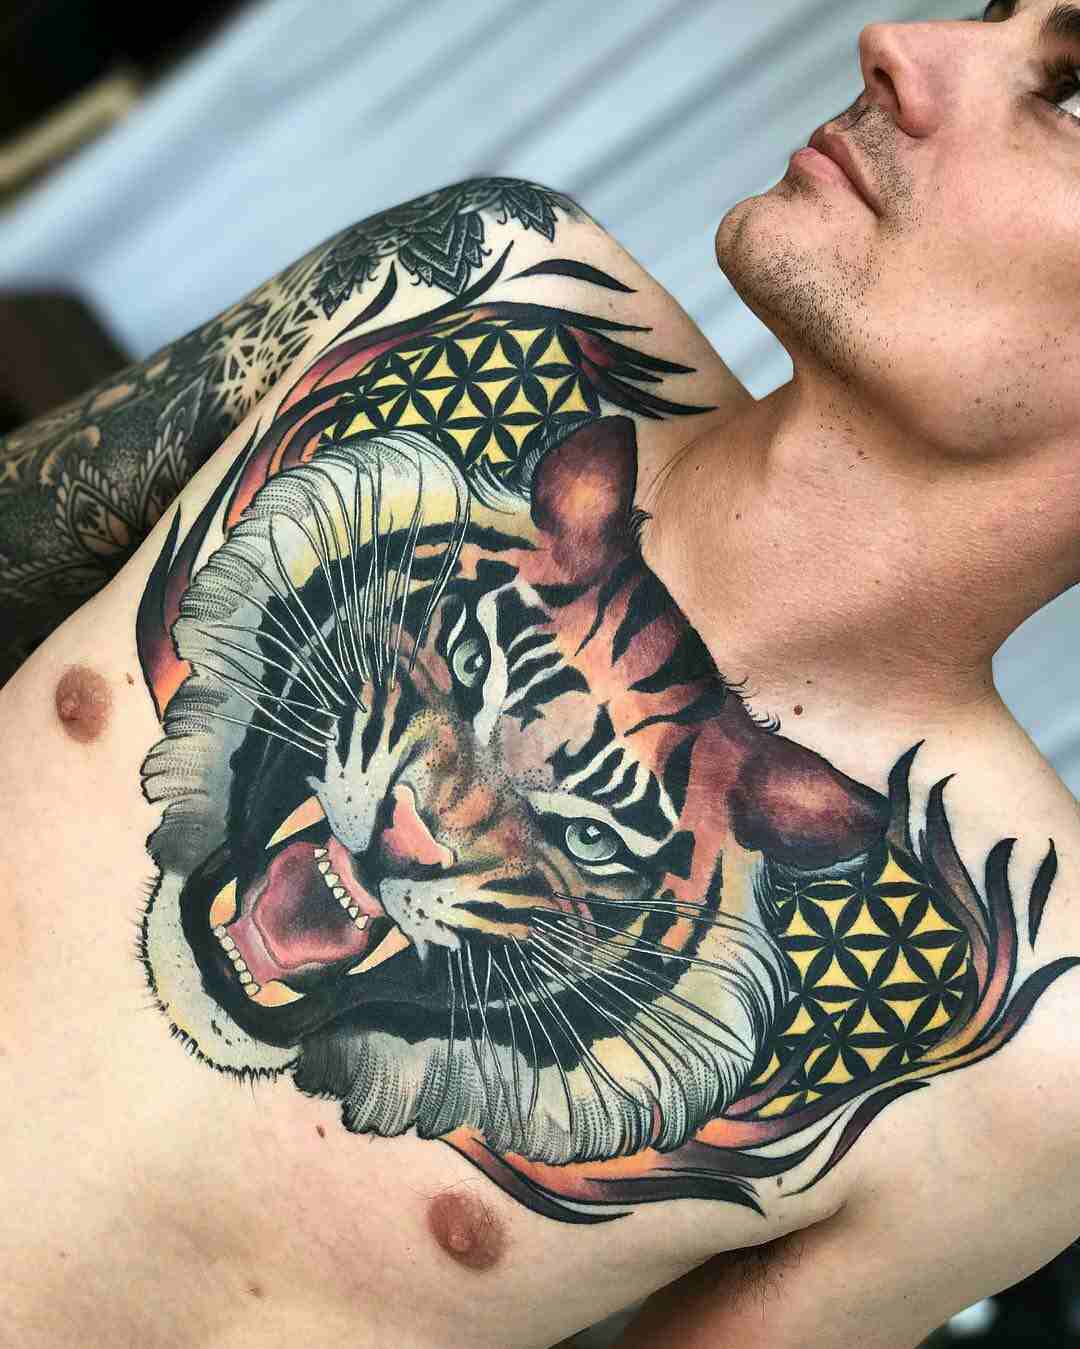 Amazing Roaring Tiger Tattoo Design On Full Chest For Men